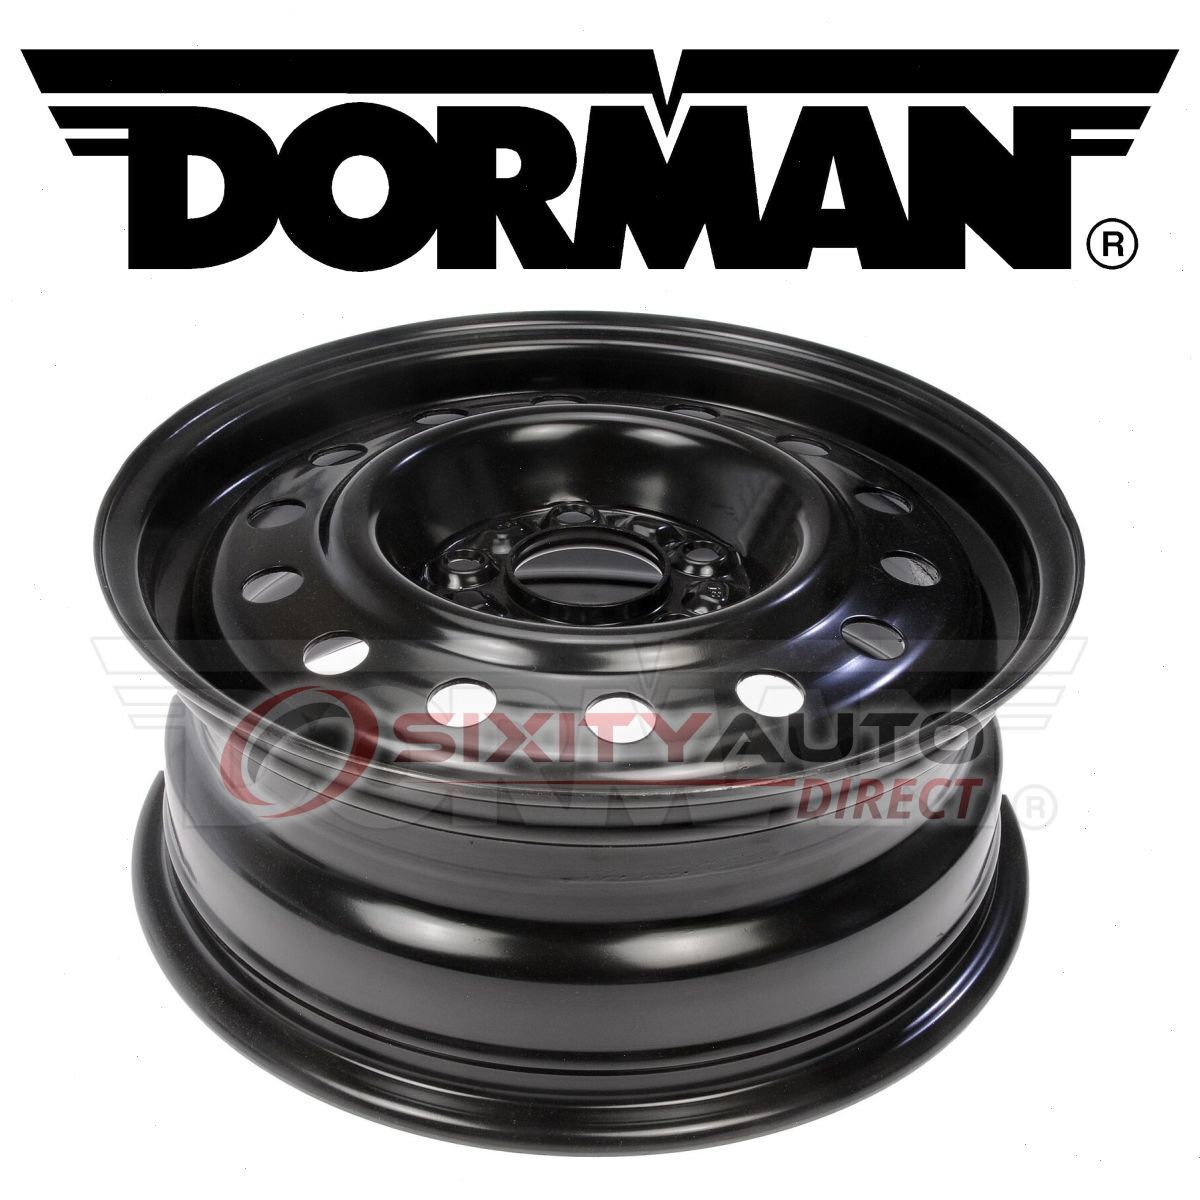 Dorman Wheel for 2001-2005 Saturn L300 Tire  ol